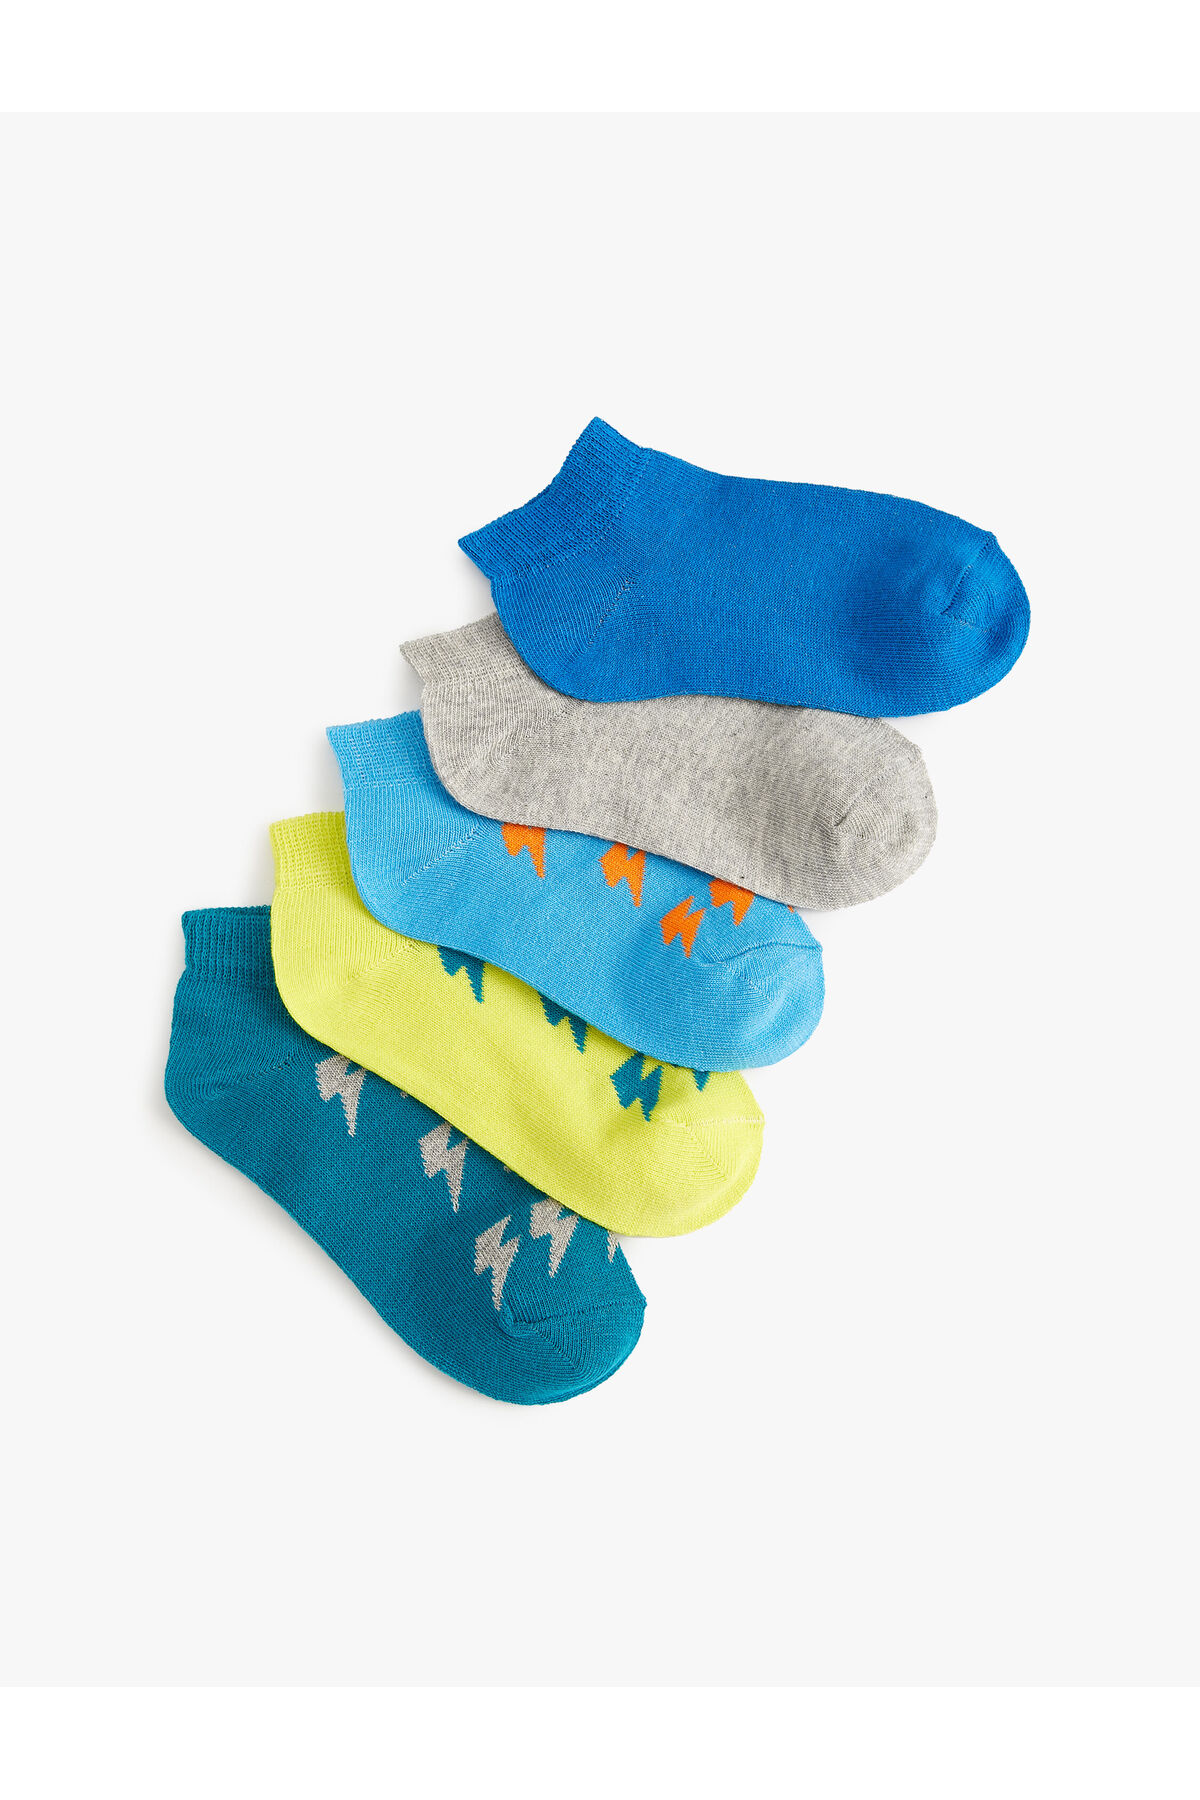 Koton 5-Piece Multicolored Booties Socks Set Cotton